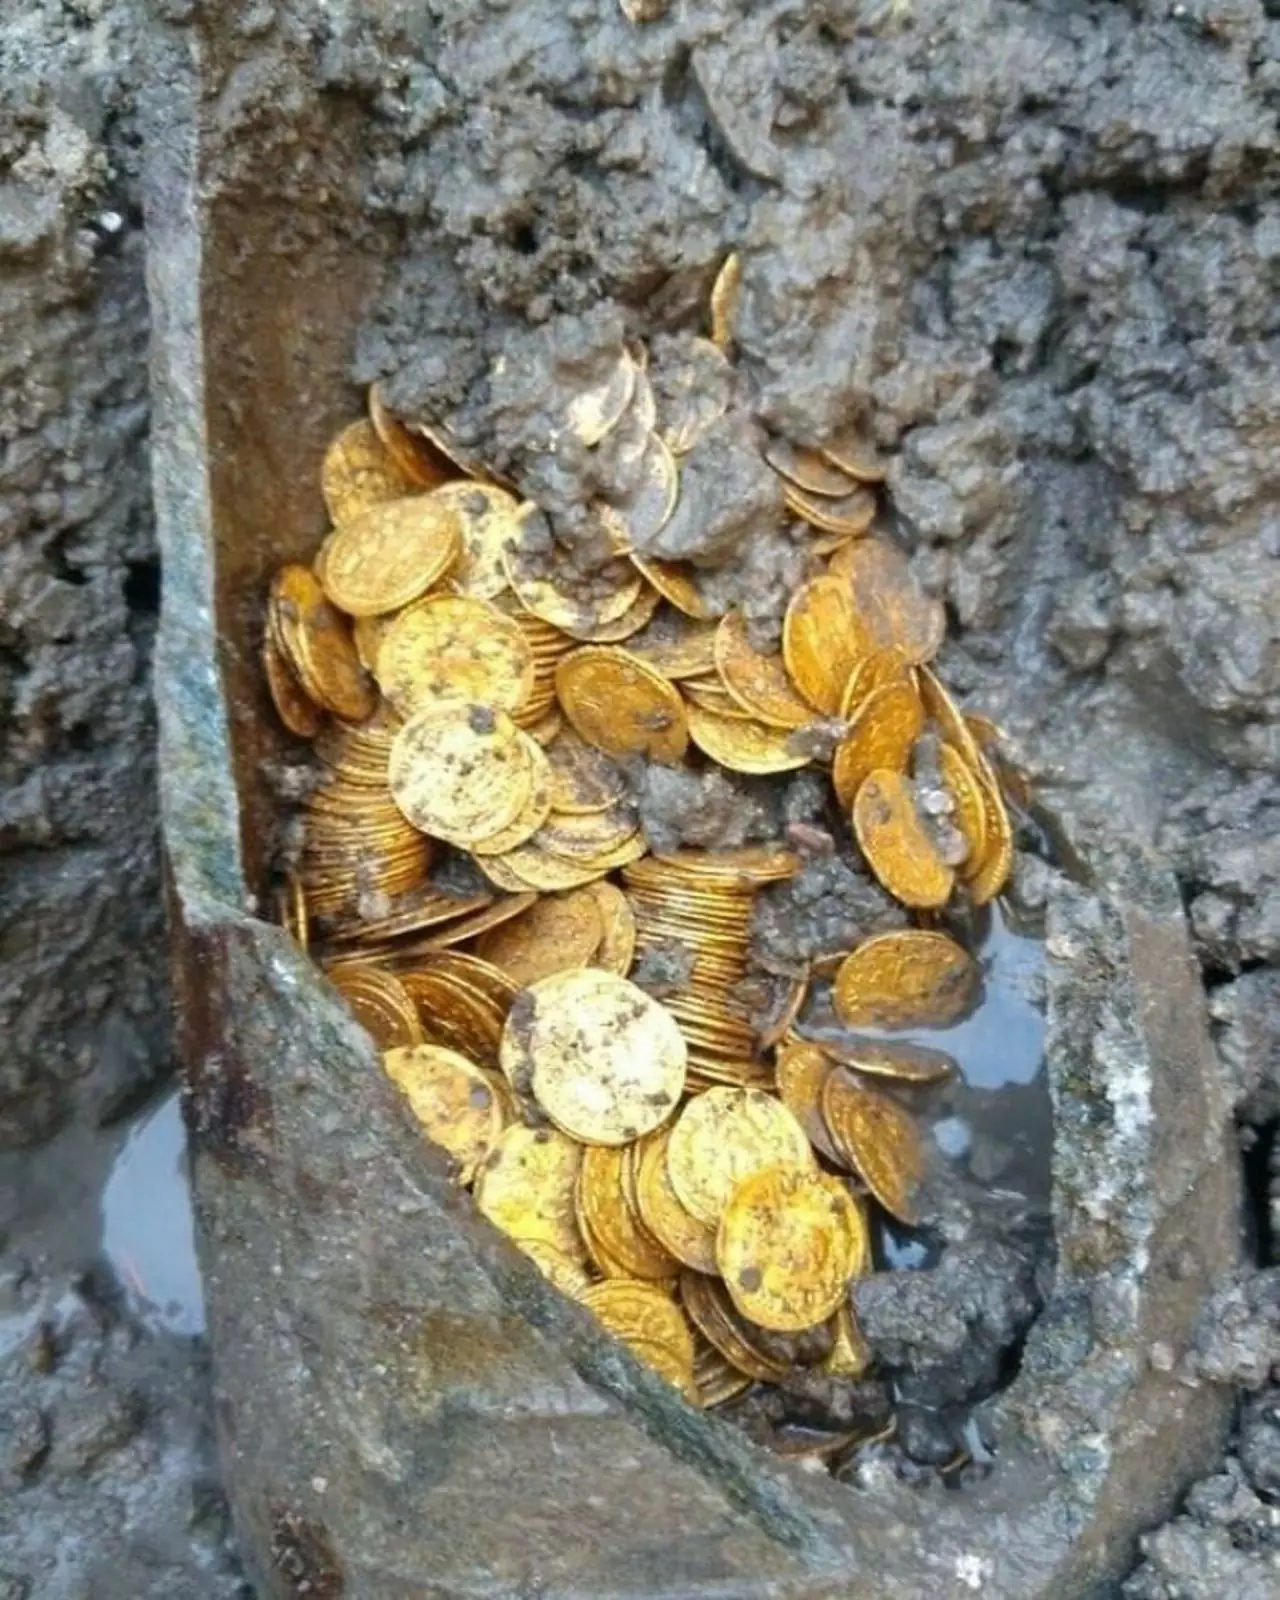 Римская амфора, наполненная золотыми монетами. Обнаружена в Комо, Италия.